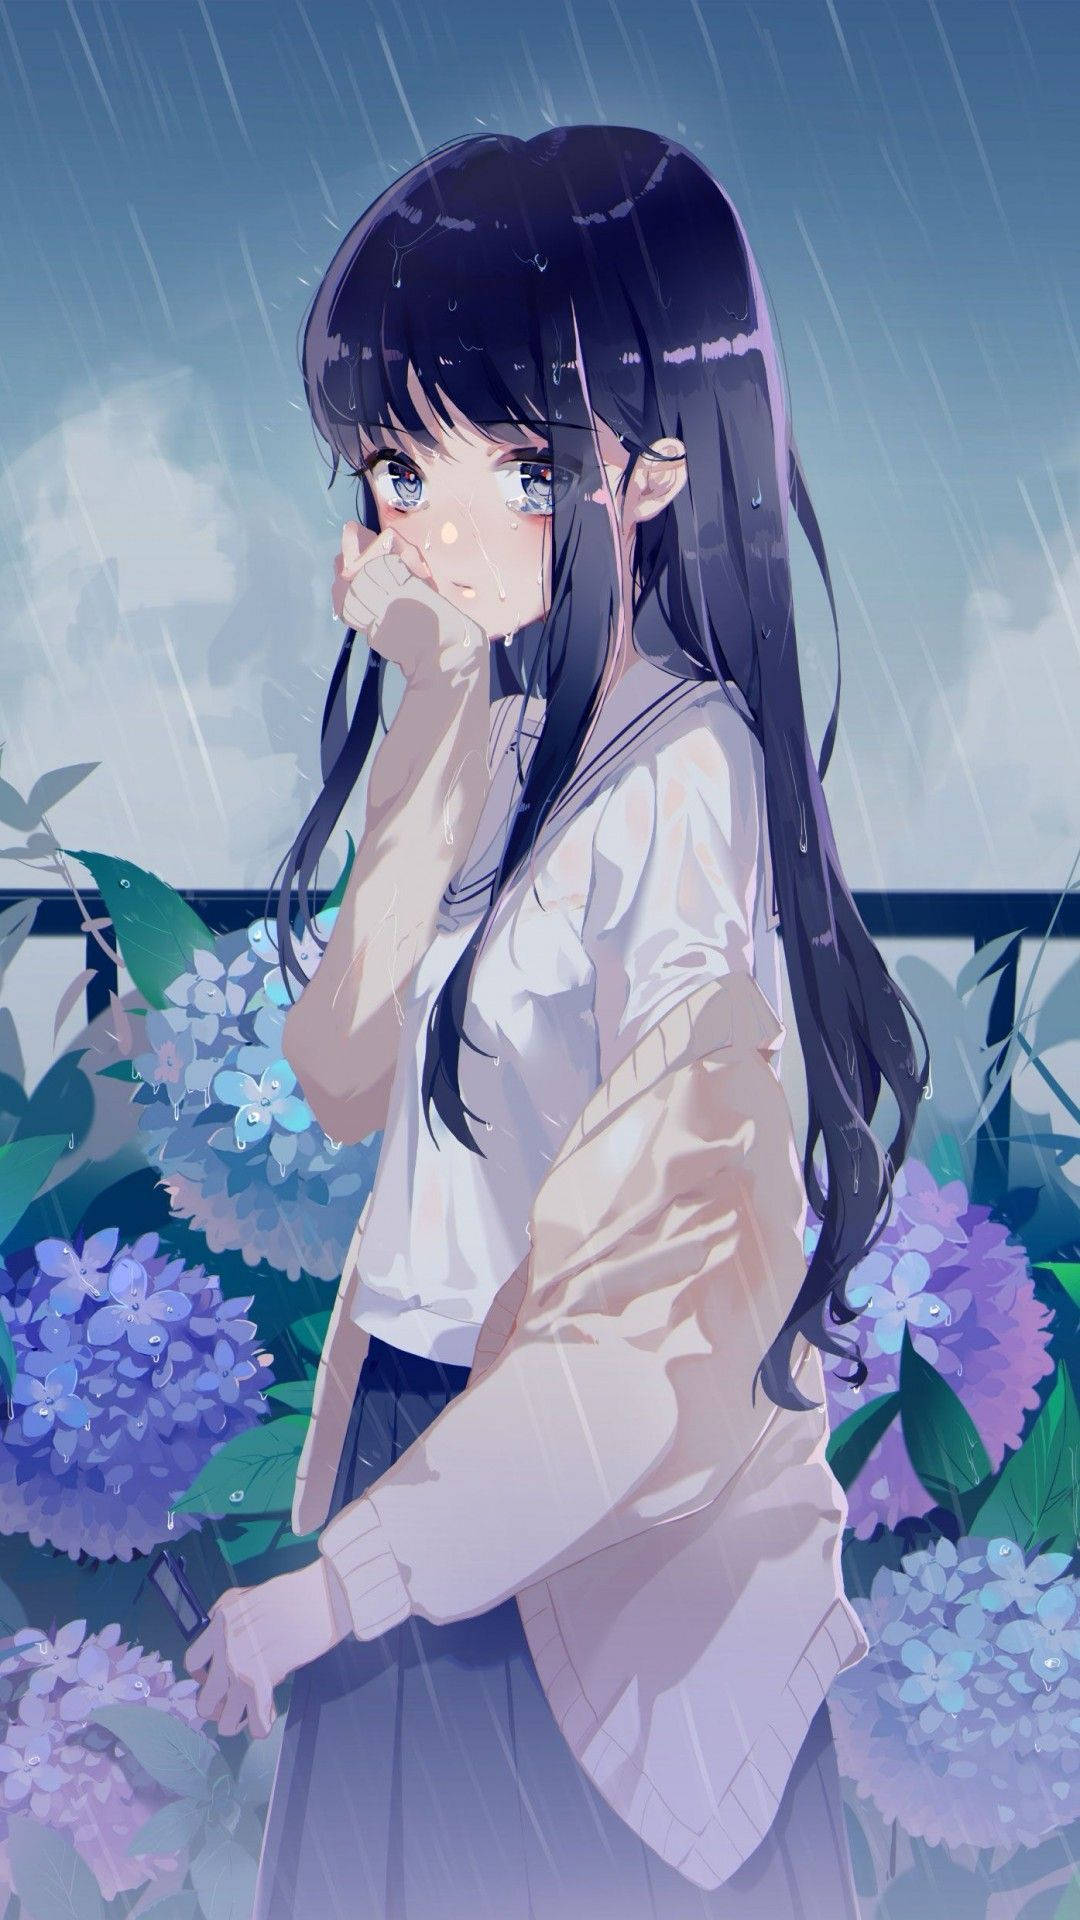 Cute Sad Anime Girl Wallpaper